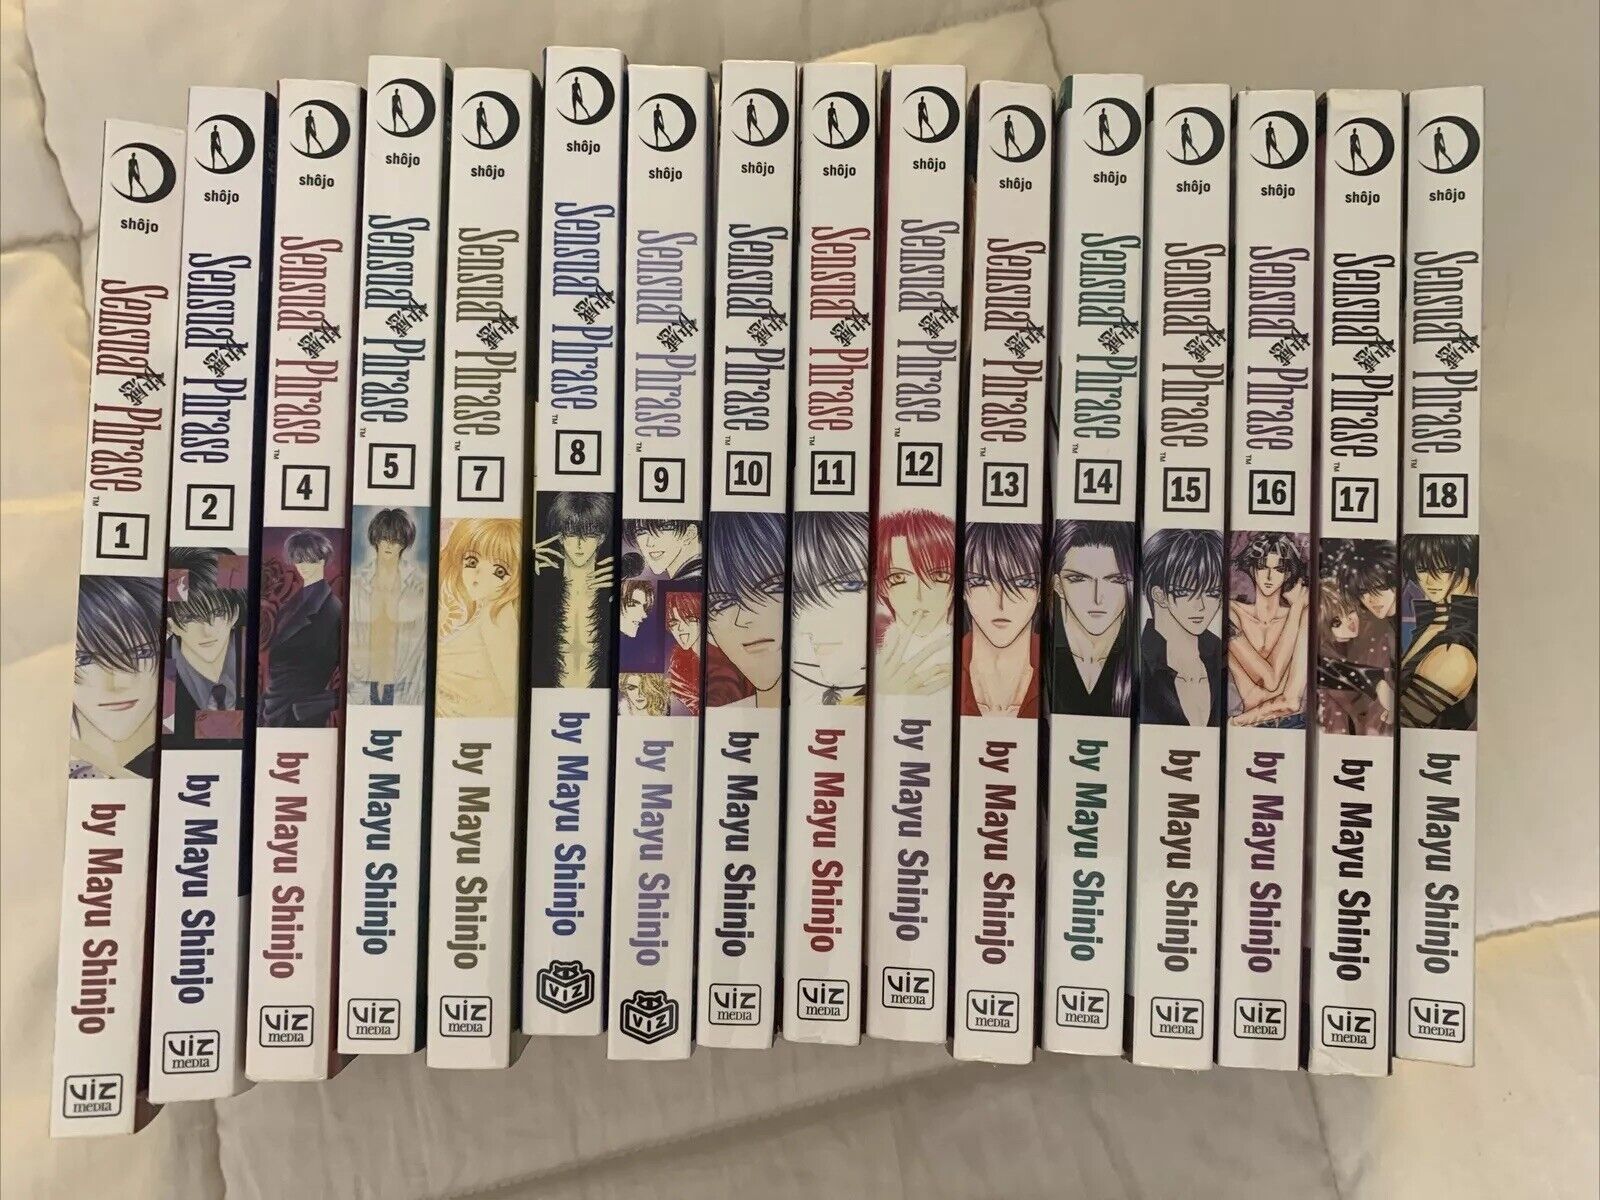 Sensual Phrase Manga by Mayu Shinjo Volumes 1-18 Missing #3 & 6